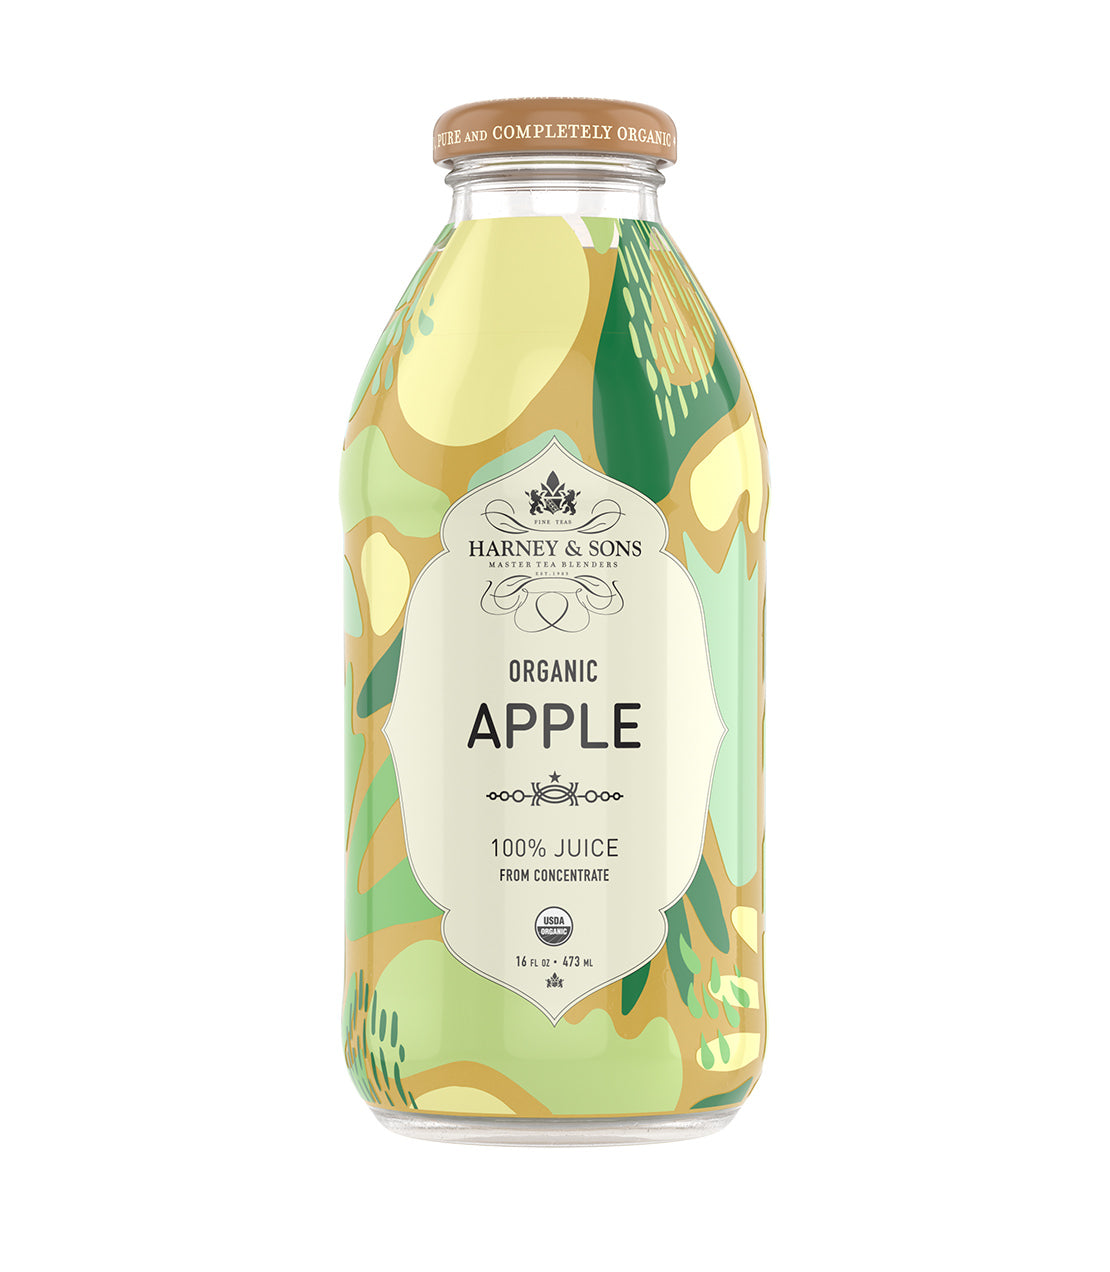 Nice! Organic Apple Juice Drink Apple